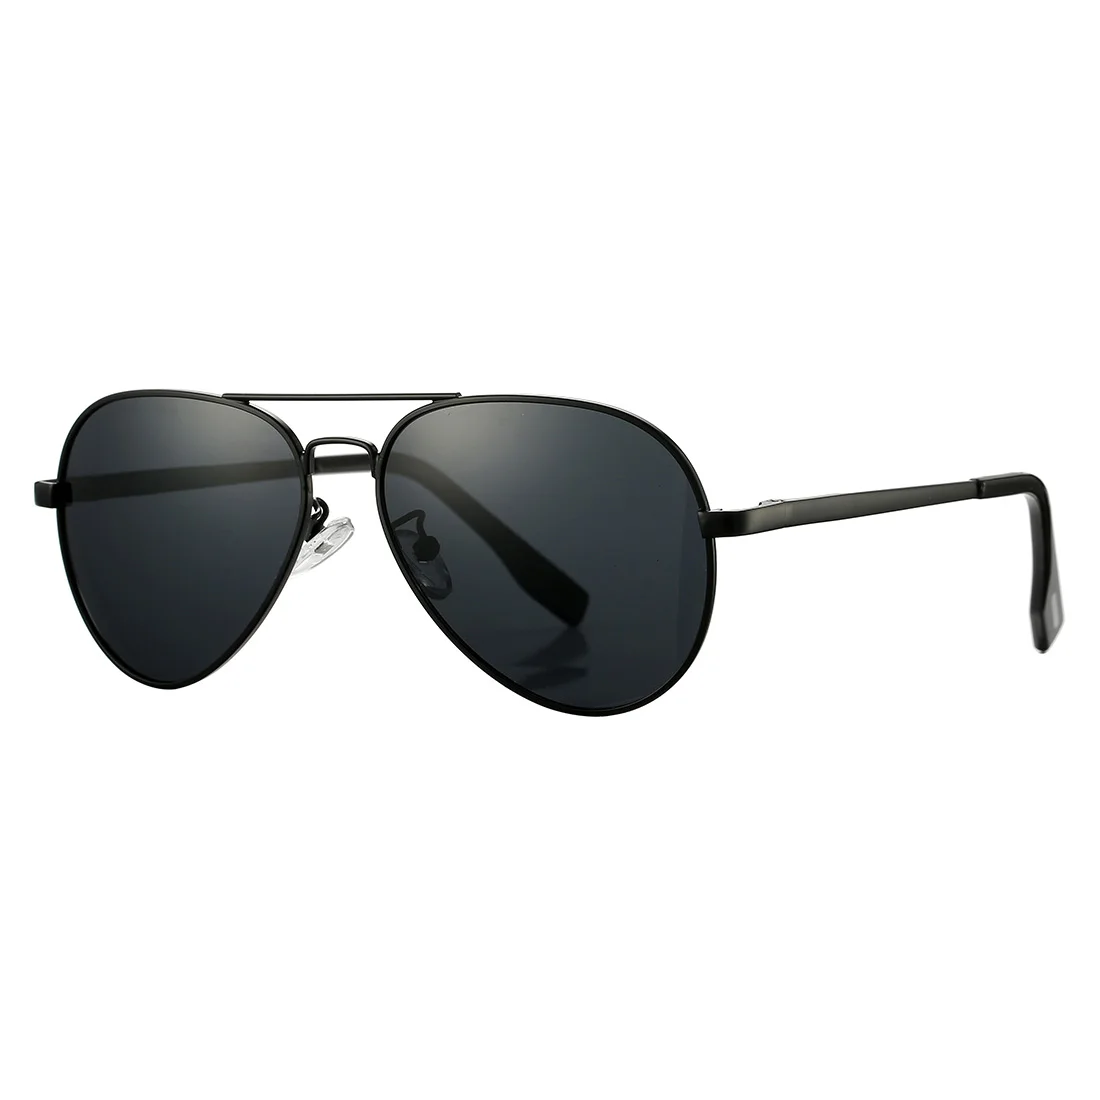 

Amazon hot sales Polarized pilot Sunglasses for Men and Women 100% UV Protection 58mm lenses sunglasses 2022, Picture shows